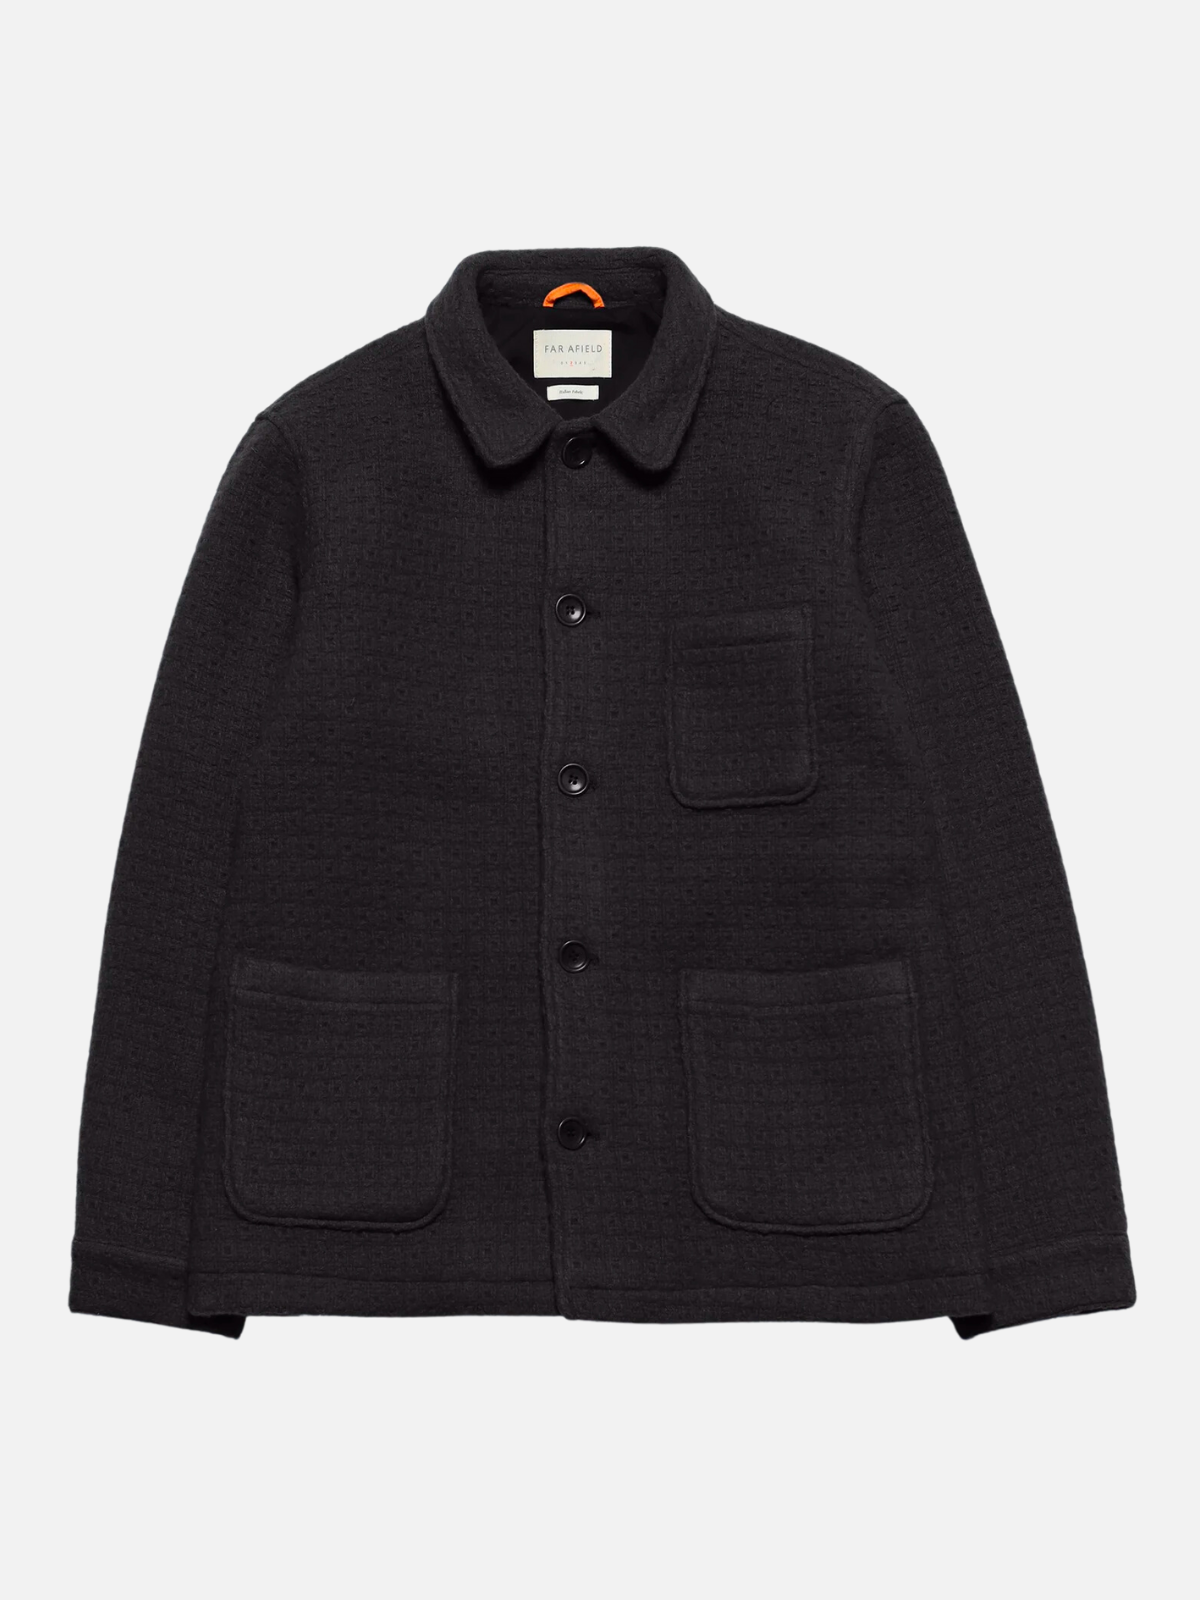 far afield station jacket meteorite black jacquard knit club collar chore coat kempt athens ga georgia men's clothing store